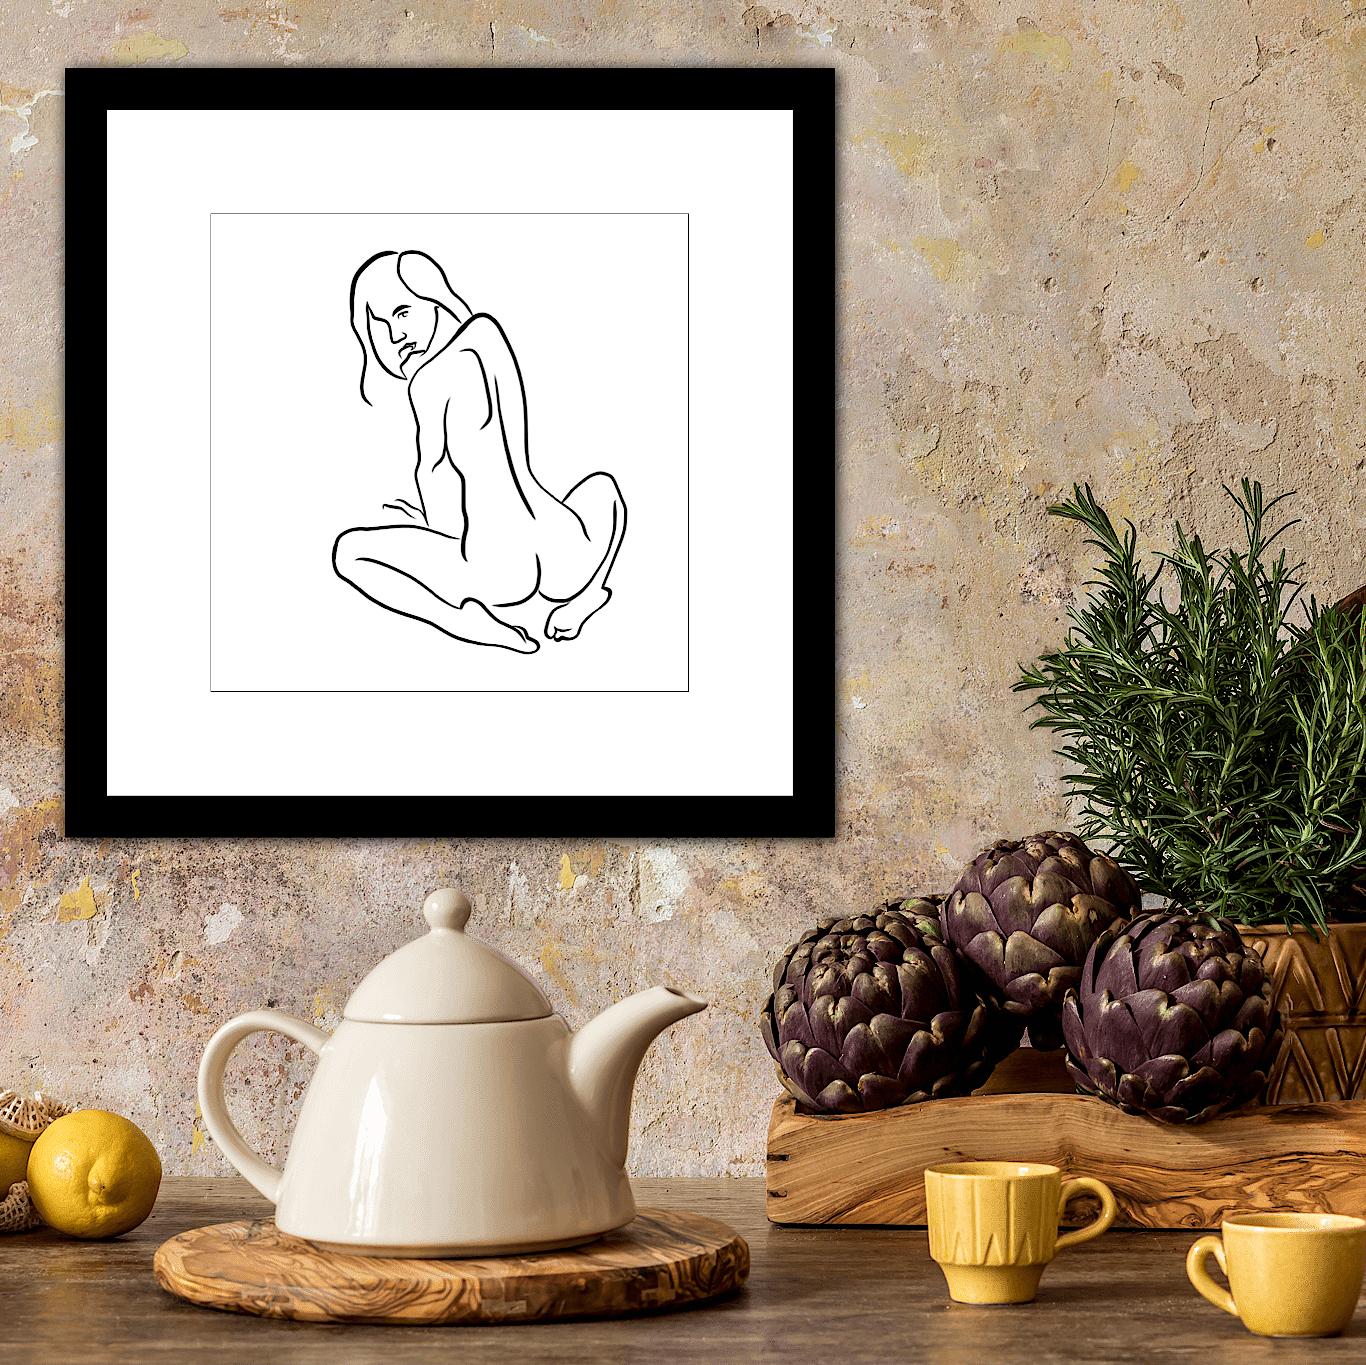 Haiku #35 - Digital Vector Drawing Seated Female Nude Woman Figure Looking Back - Contemporary Print by Michael Binkley